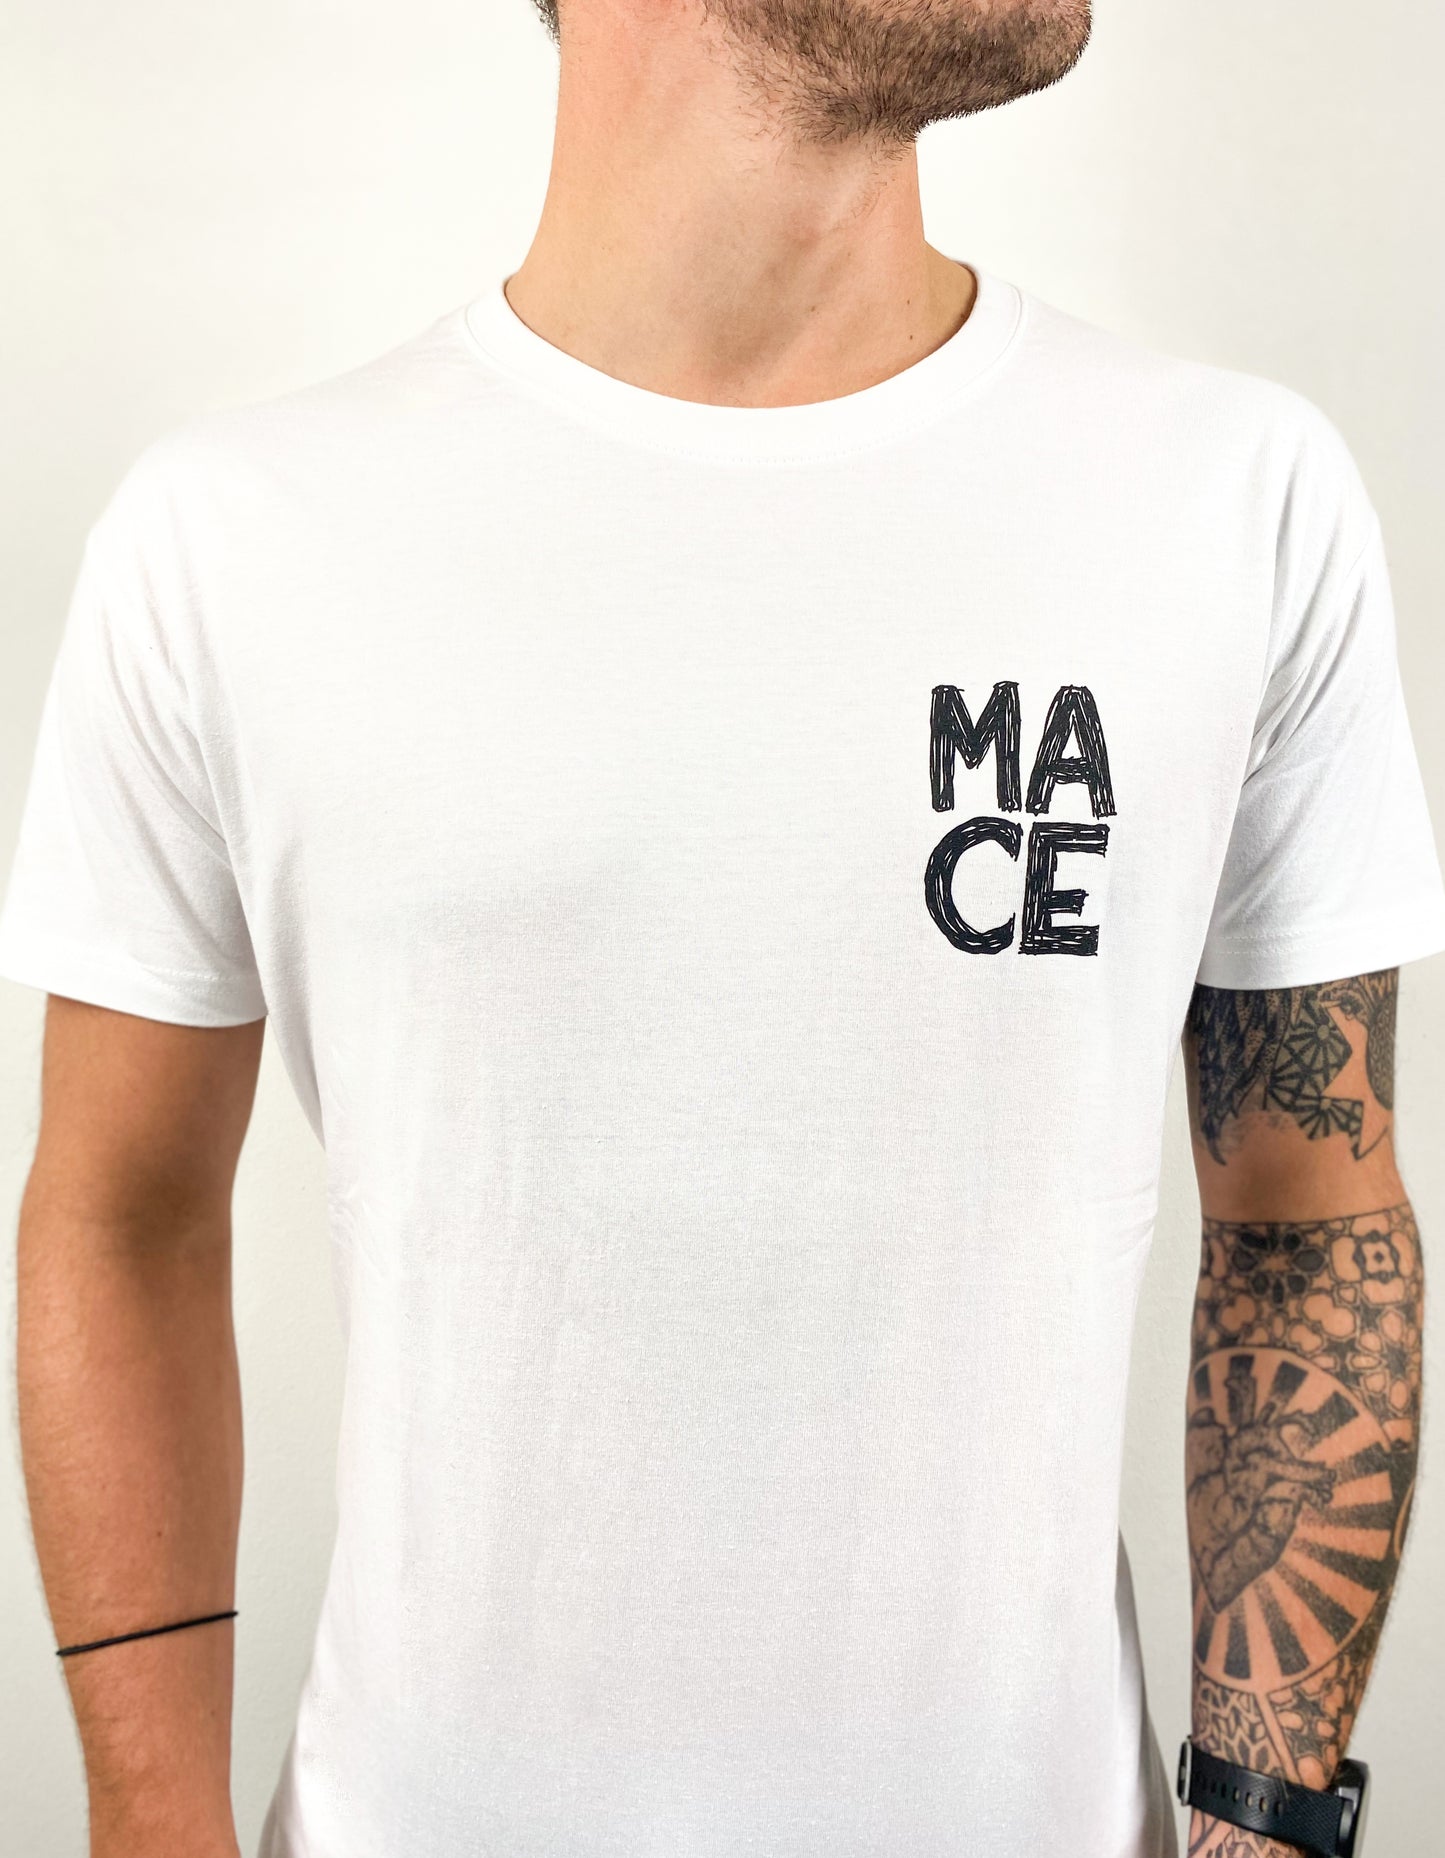 MACE - Shirt